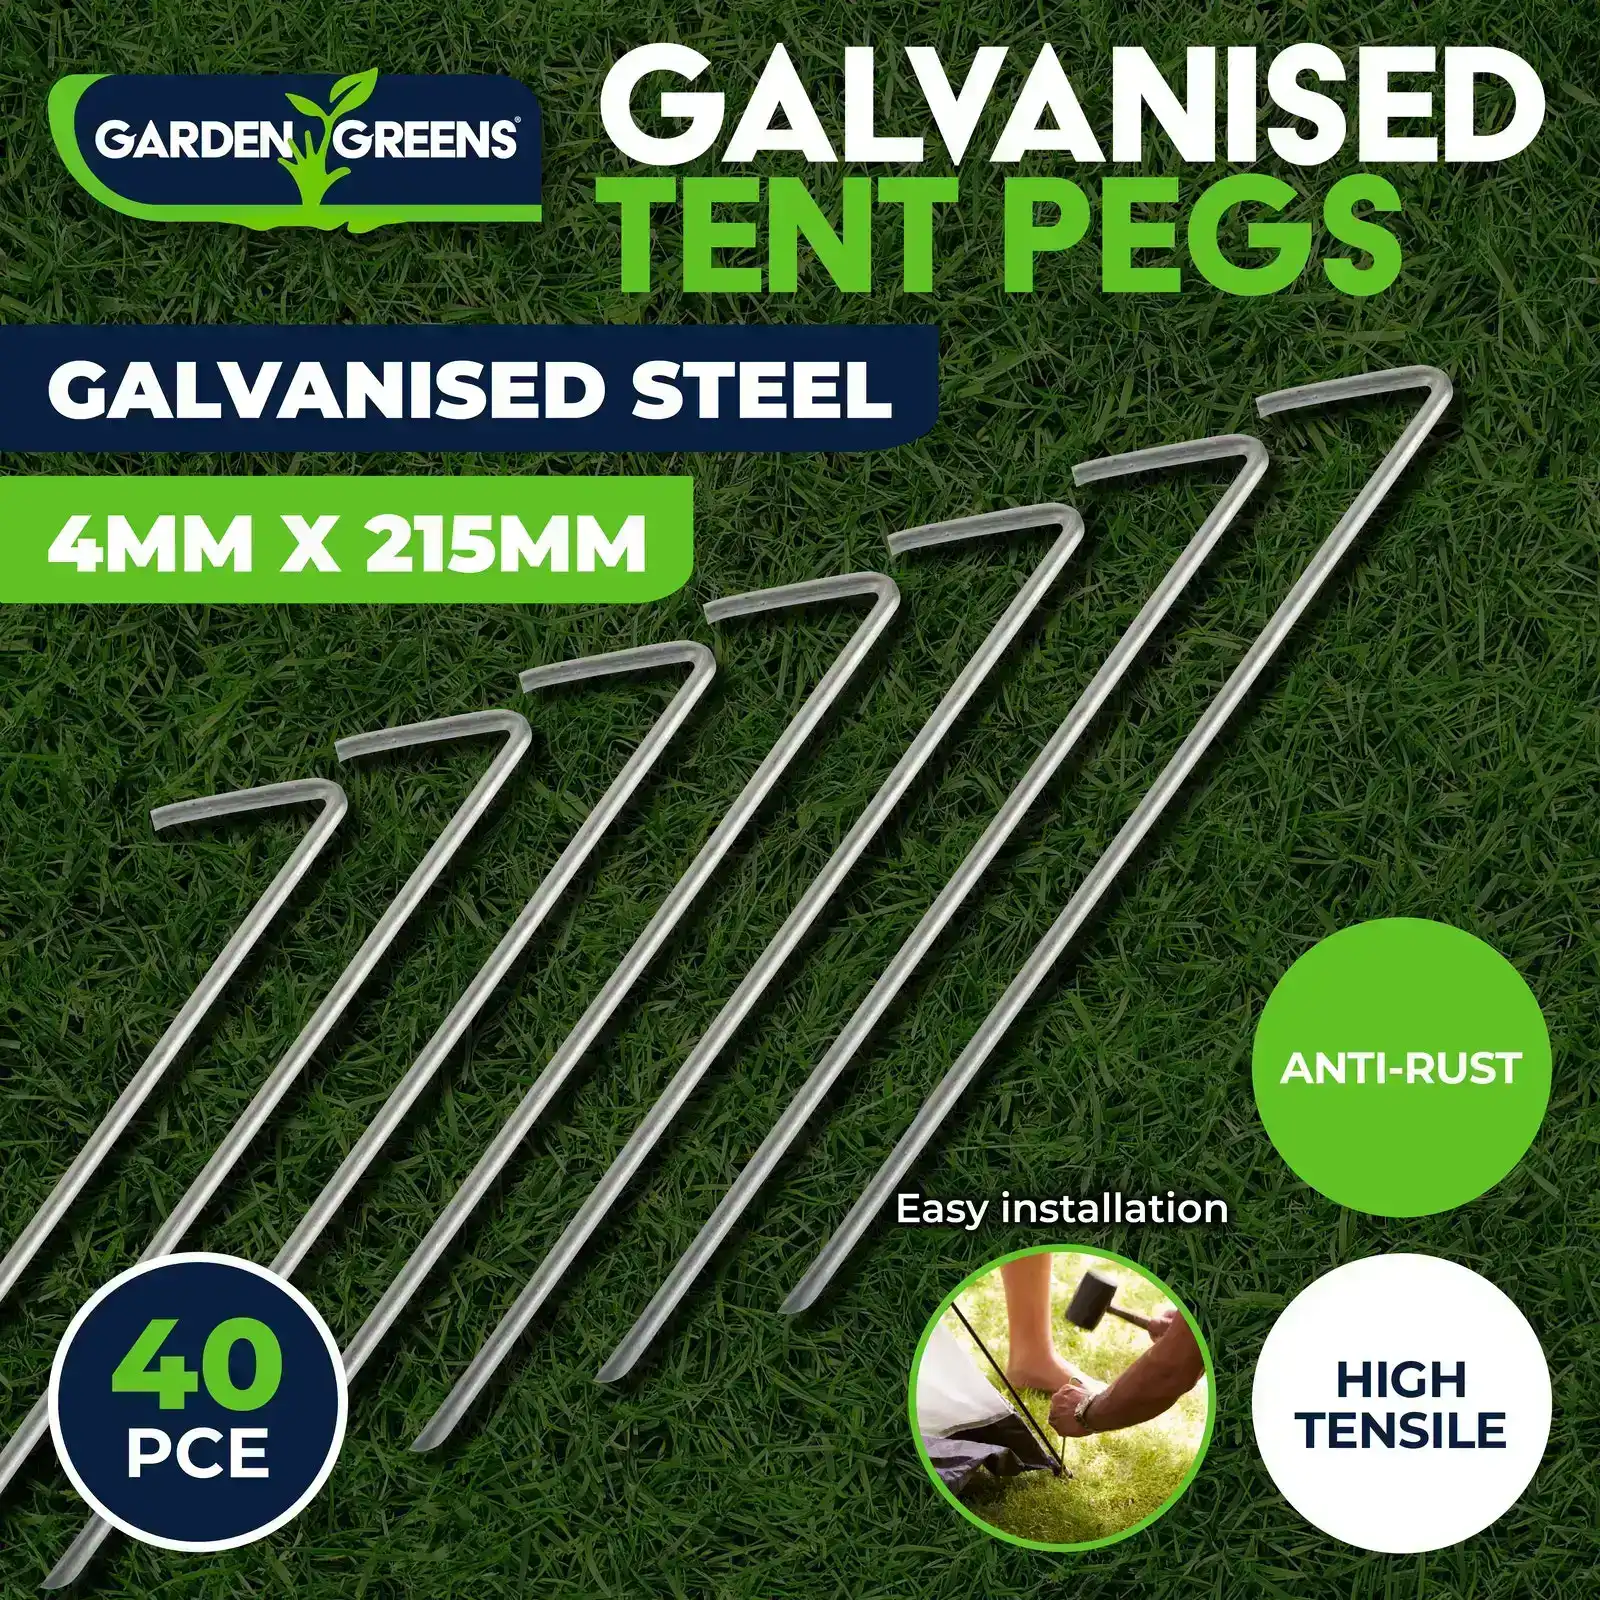 Garden Greens® 40PCE Tent Pegs Multi Purpose Anti Rust High Tensile 4 x 215mm